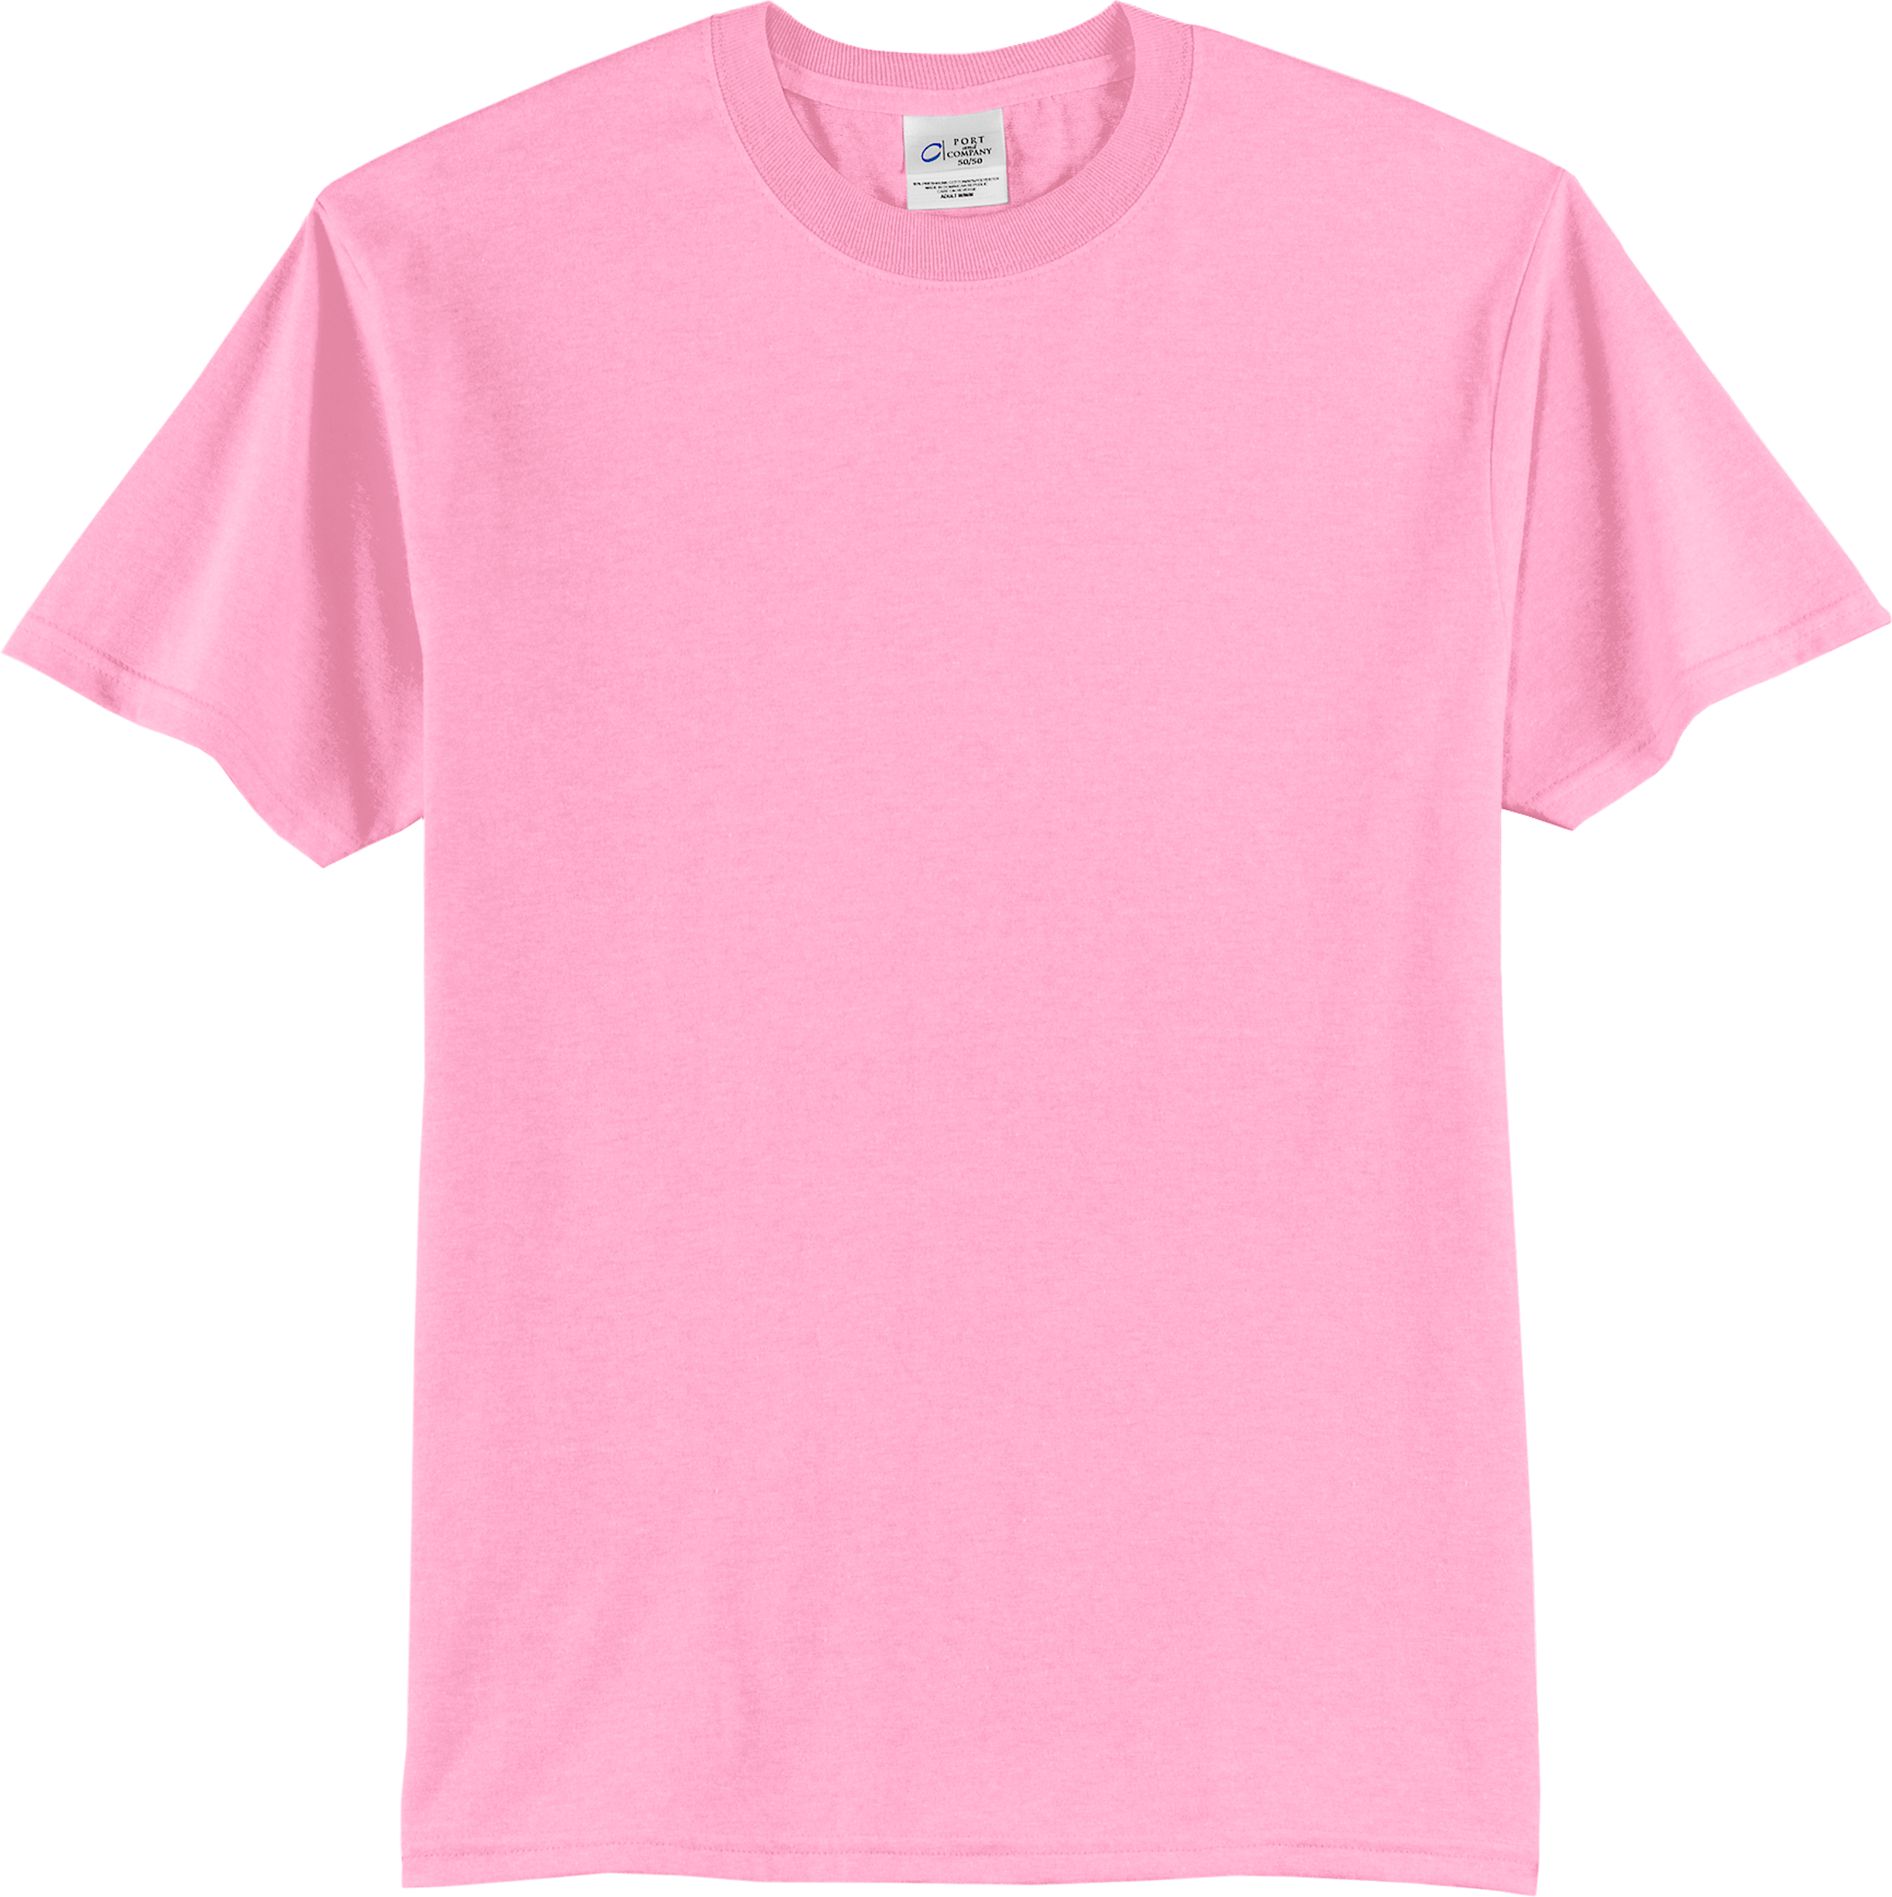 candy pink blank Tshirt Basic tees shop